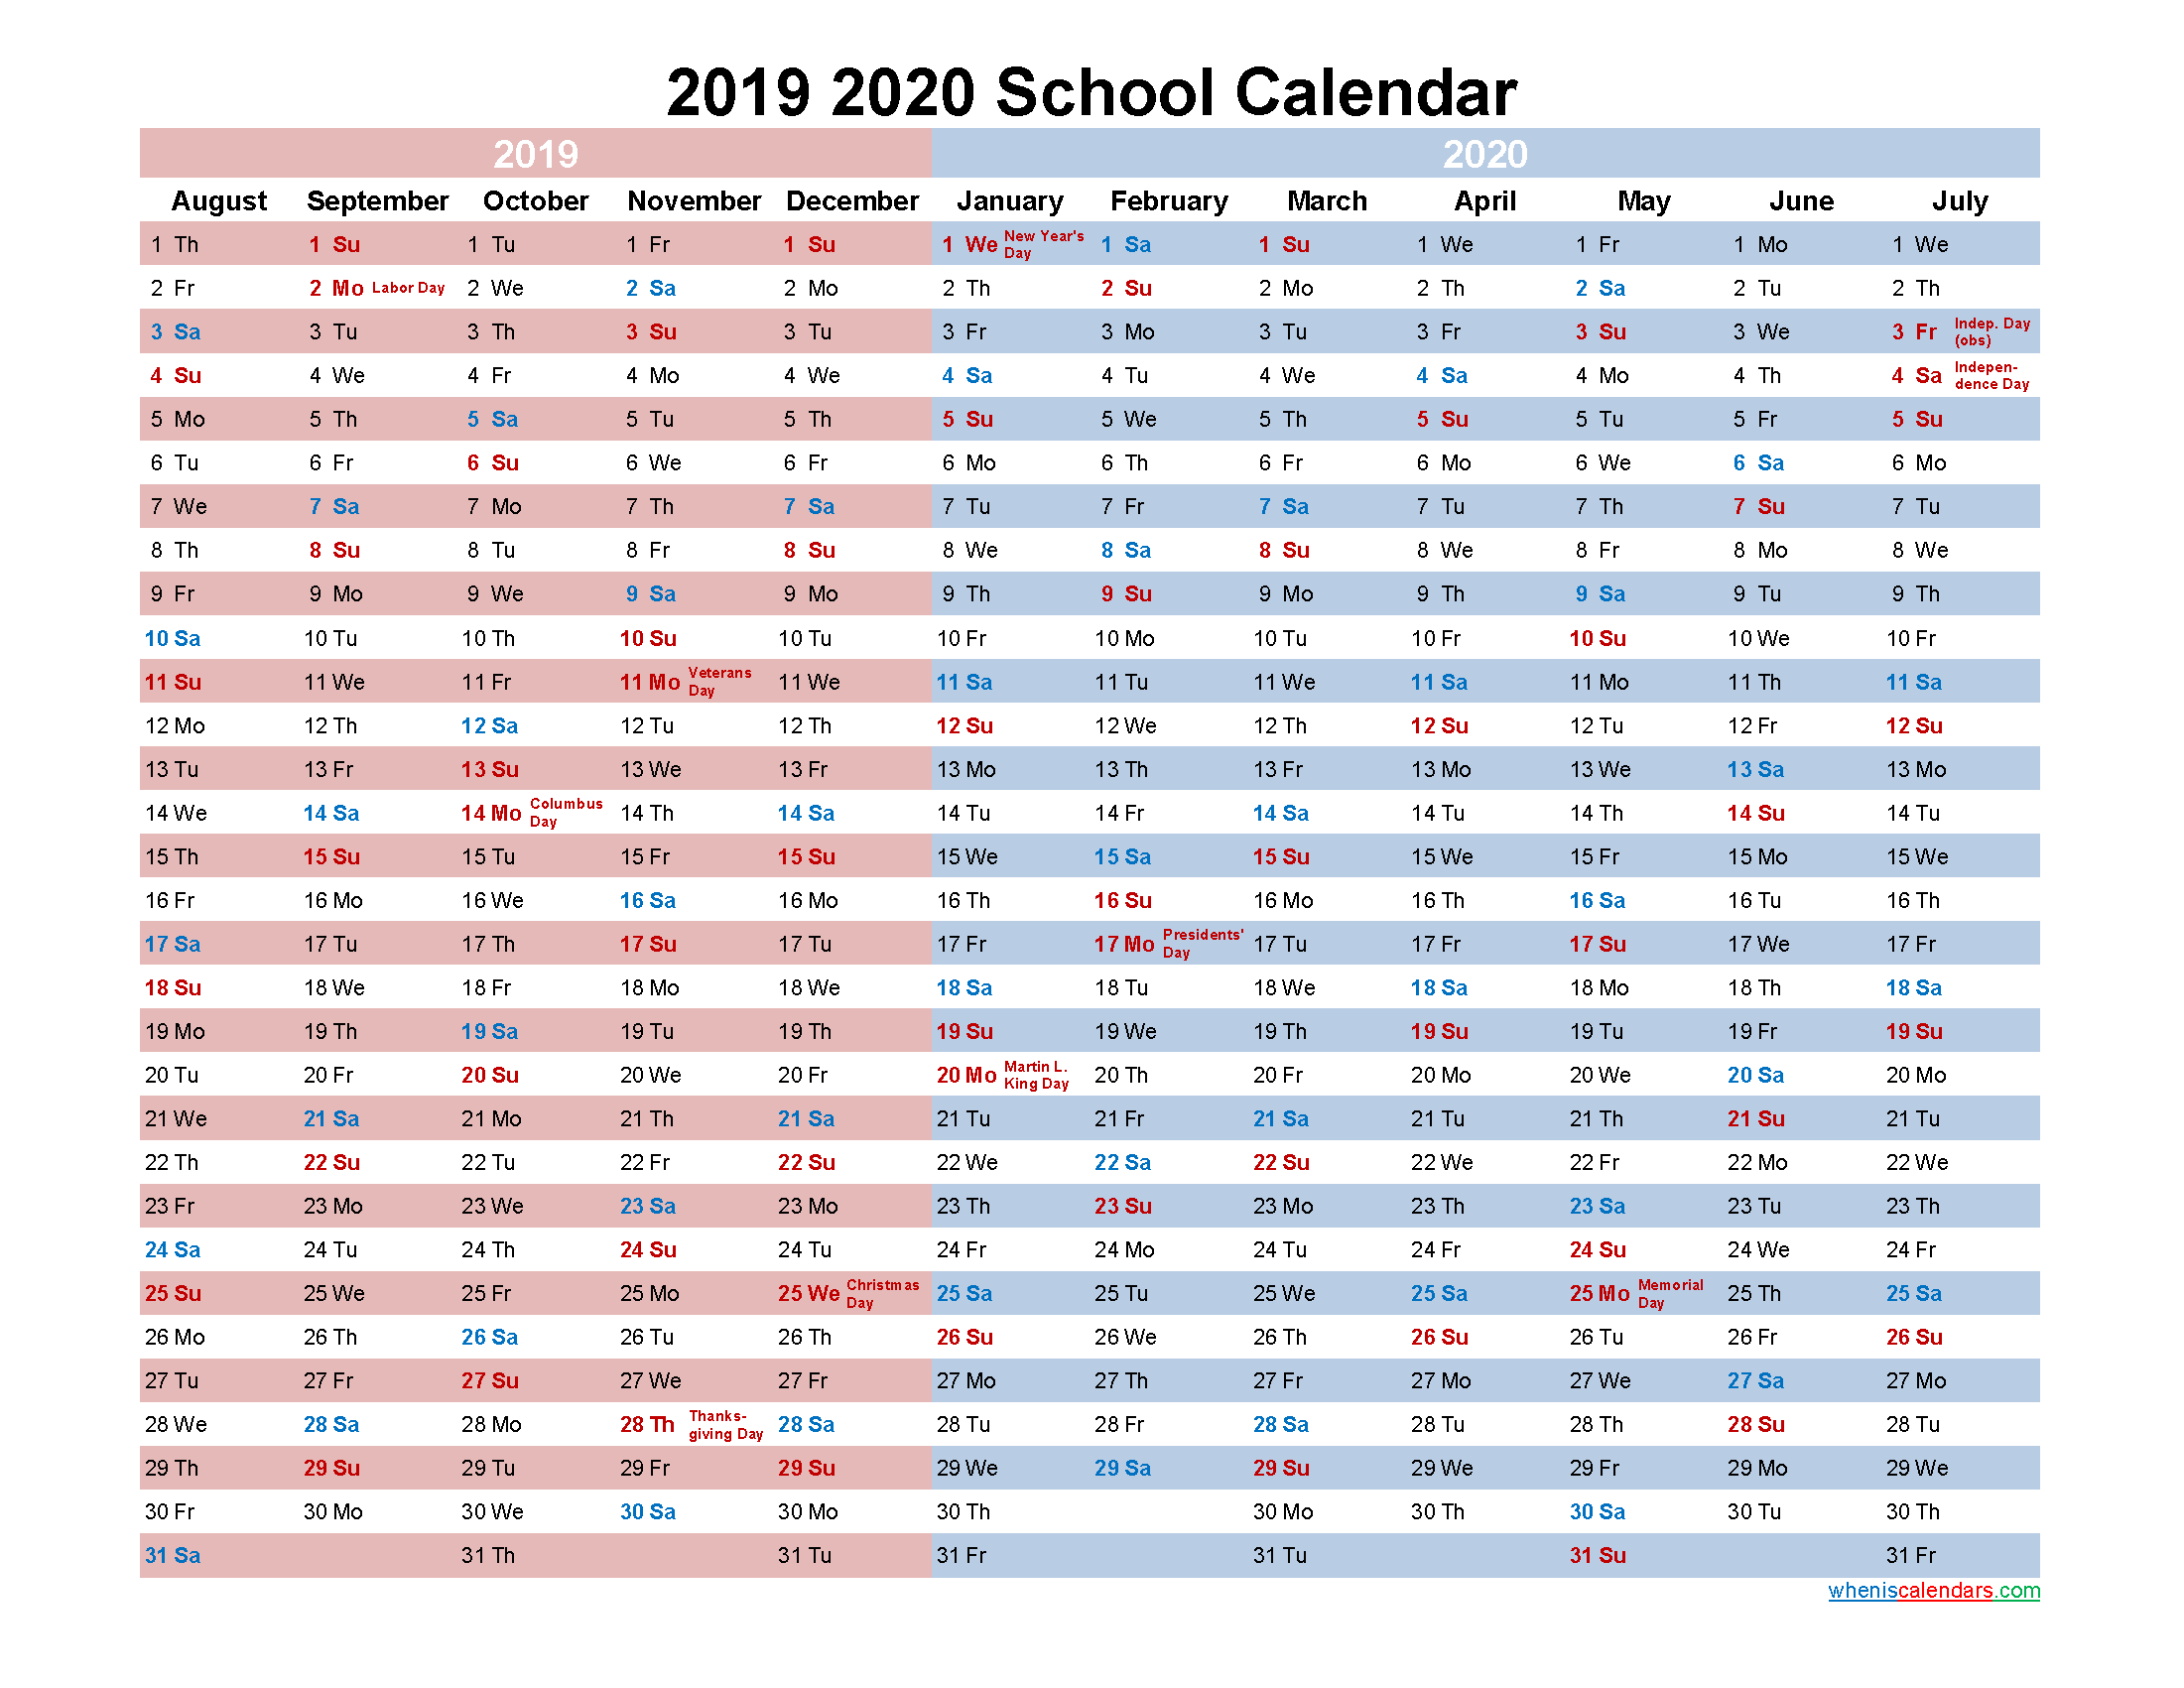 2019 and 2020 School Calendar Printable - Template No.20scl60